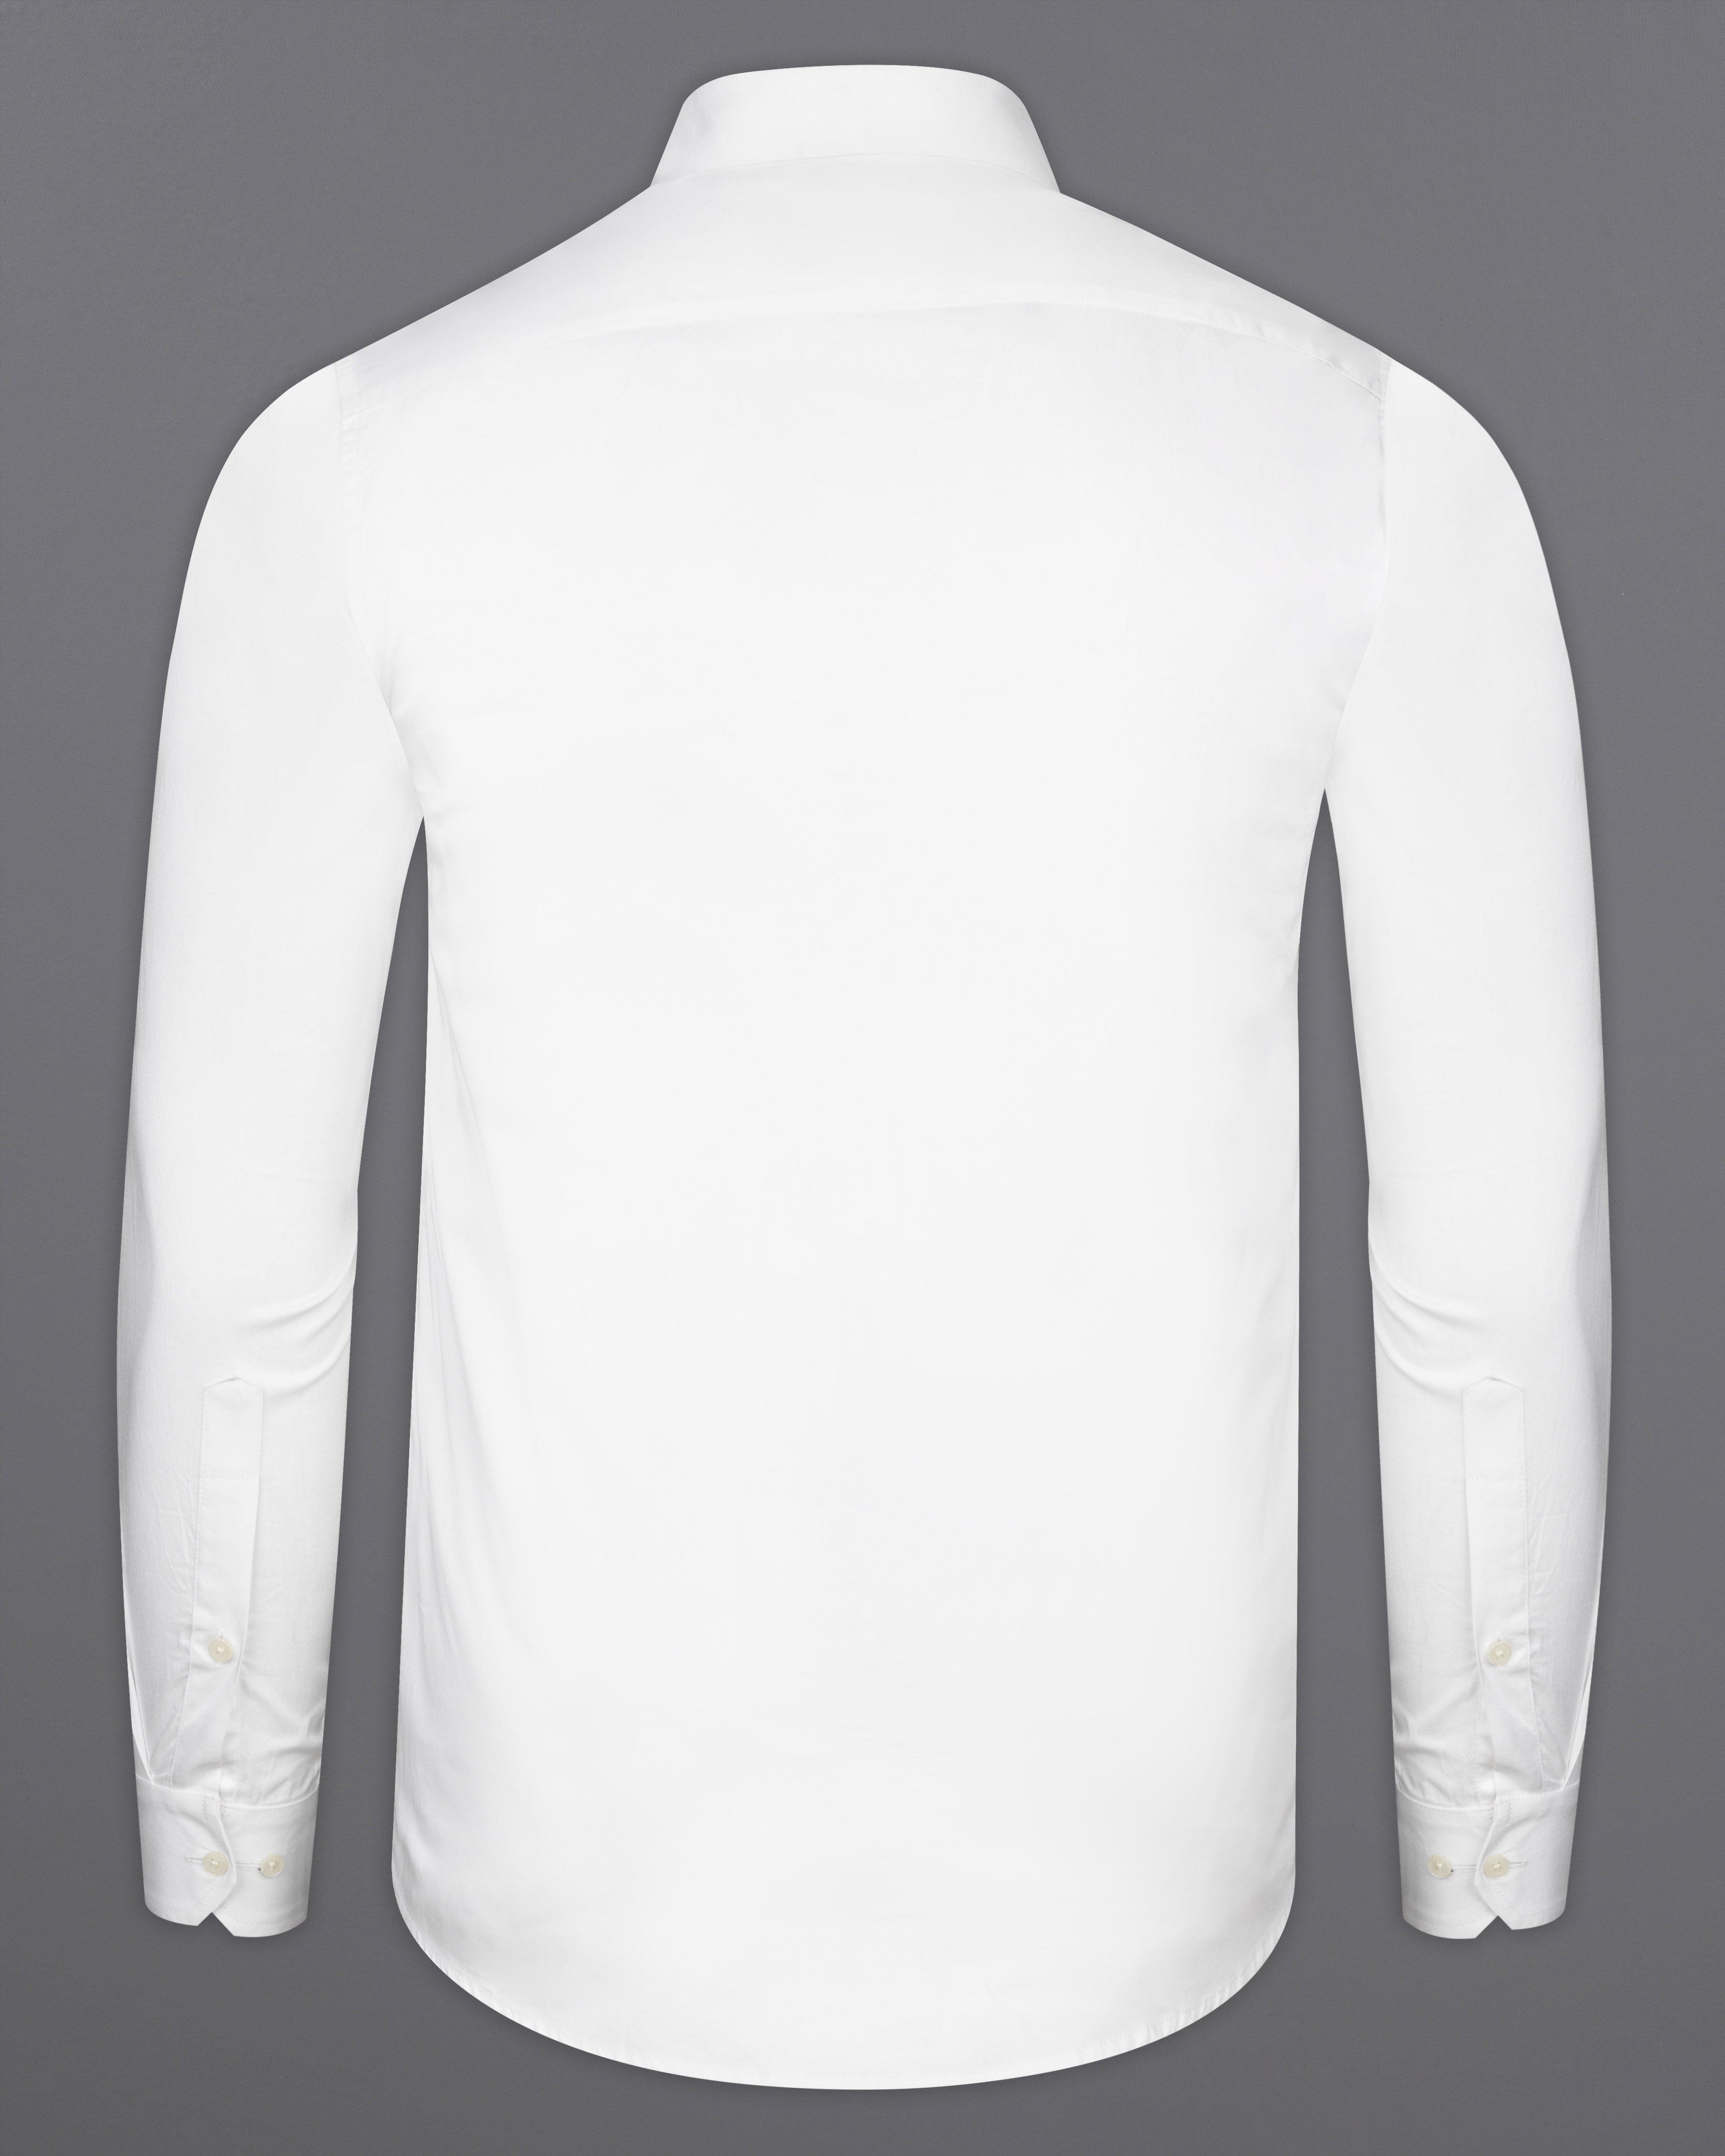 Bright White with Handcrafted Golden Beats Work Super Soft Premium Cotton Designer Shirt 1062-BLK-E093-38, 1062-BLK-E093-H-38, 1062-BLK-E093-39, 1062-BLK-E093-H-39, 1062-BLK-E093-40, 1062-BLK-E093-H-40, 1062-BLK-E093-42, 1062-BLK-E093-H-42, 1062-BLK-E093-44, 1062-BLK-E093-H-44, 1062-BLK-E093-46, 1062-BLK-E093-H-46, 1062-BLK-E093-48, 1062-BLK-E093-H-48, 1062-BLK-E093-50, 1062-BLK-E093-H-50, 1062-BLK-E093-52, 1062-BLK-E093-H-52